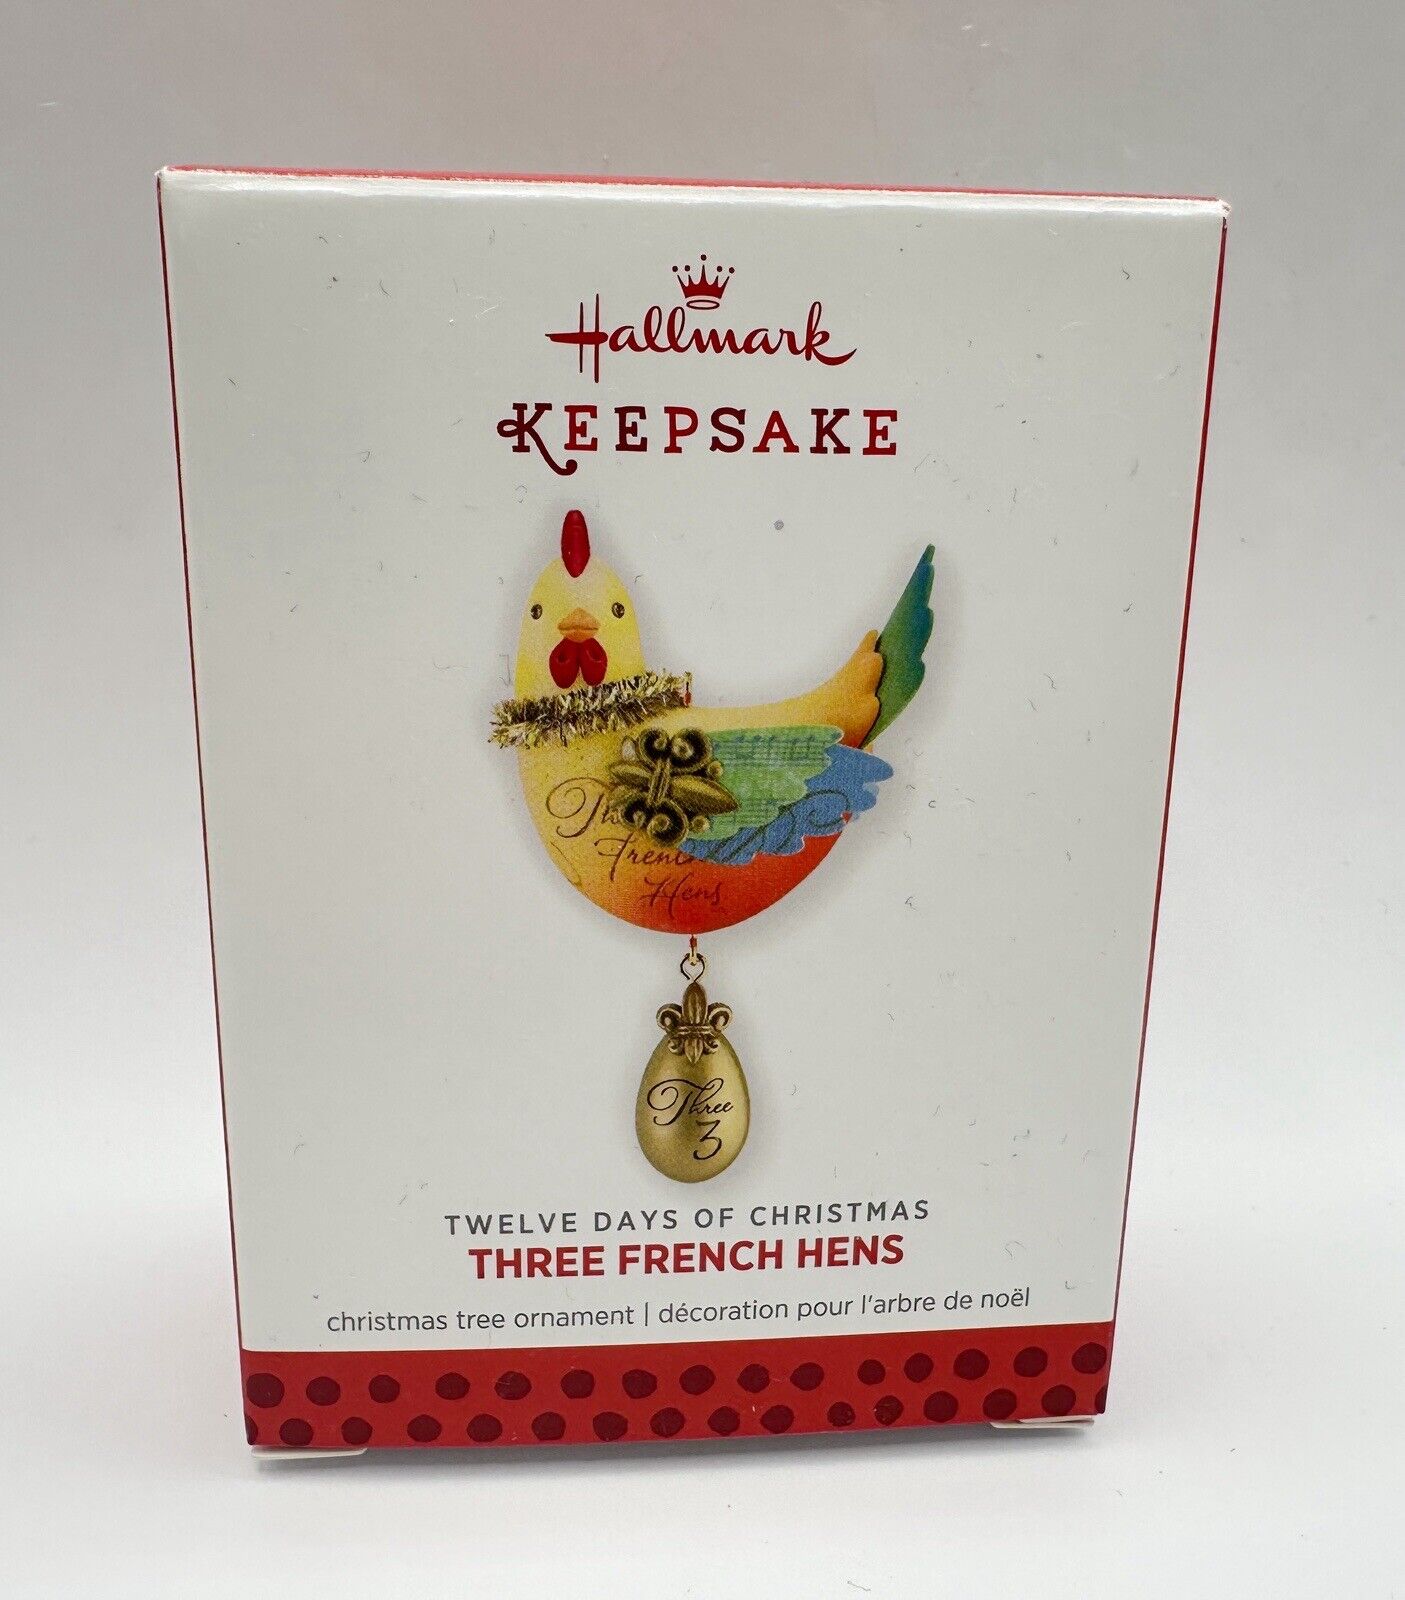 Hallmark Keepsake Twelve Days Of Christmas Three French Hens Ornament 2013